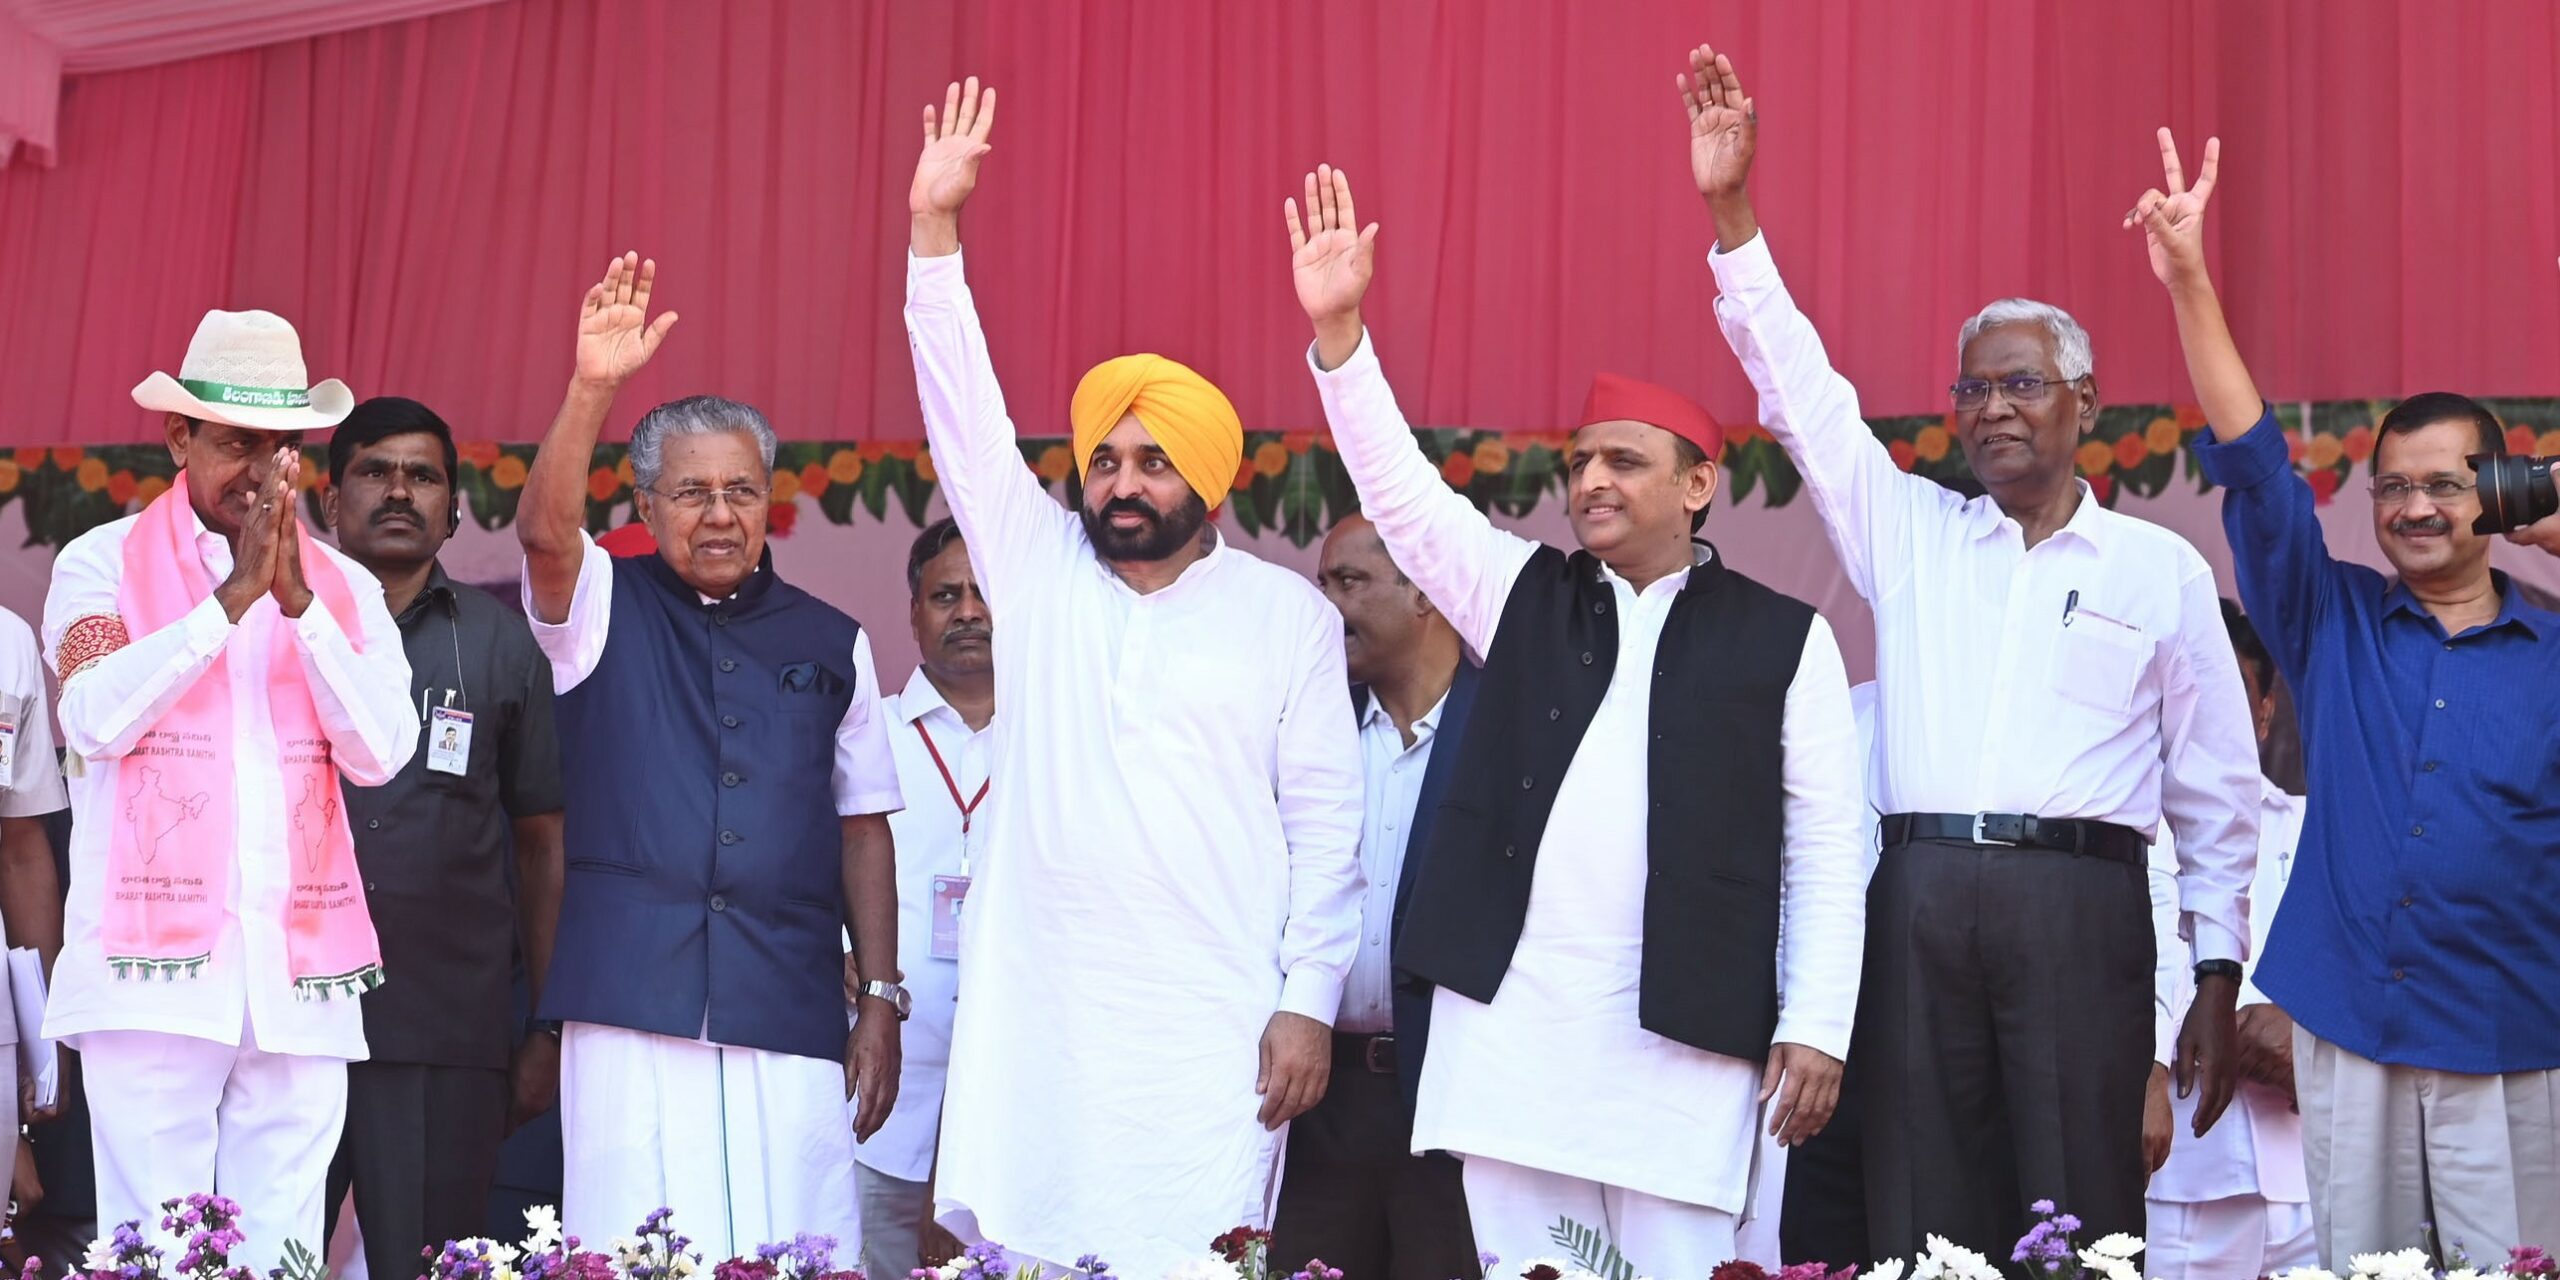 [From left] K Chandrashekar Rao, Pinarayi Vijayan, Bhagwant Mann, Akhilesh Yadav, D Raja, and Arvind Kejriwal at the BRS rally in Khammam, Telangana, on Wednesday, 18 January, 2023. (Supplied)